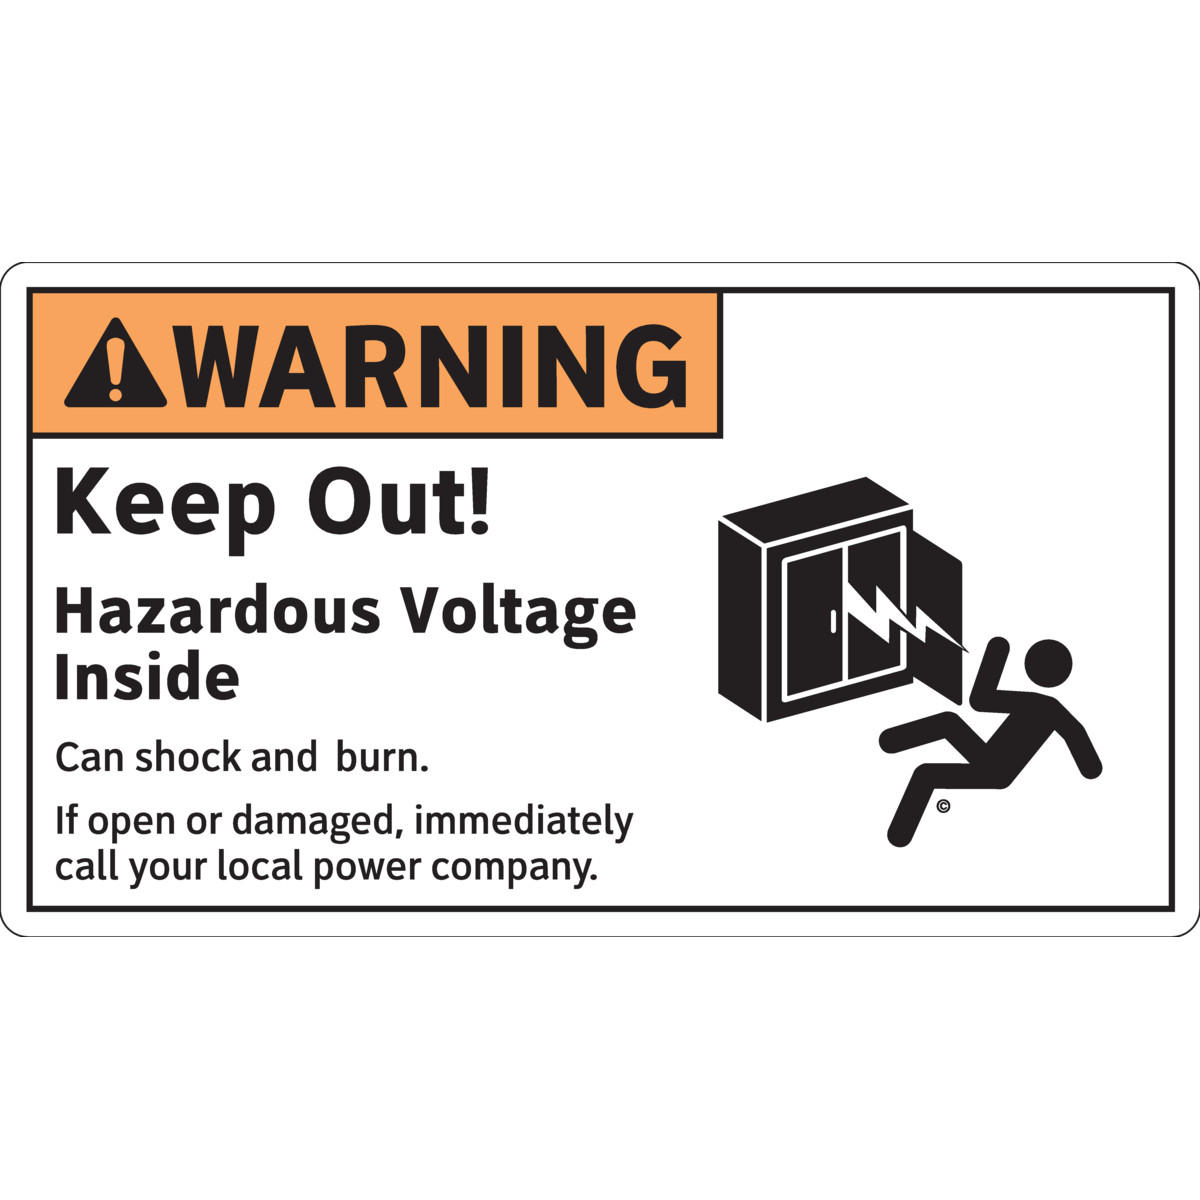 ANSI Horizontal Warning Keep Out! Hazardous Voltage Inside Labels